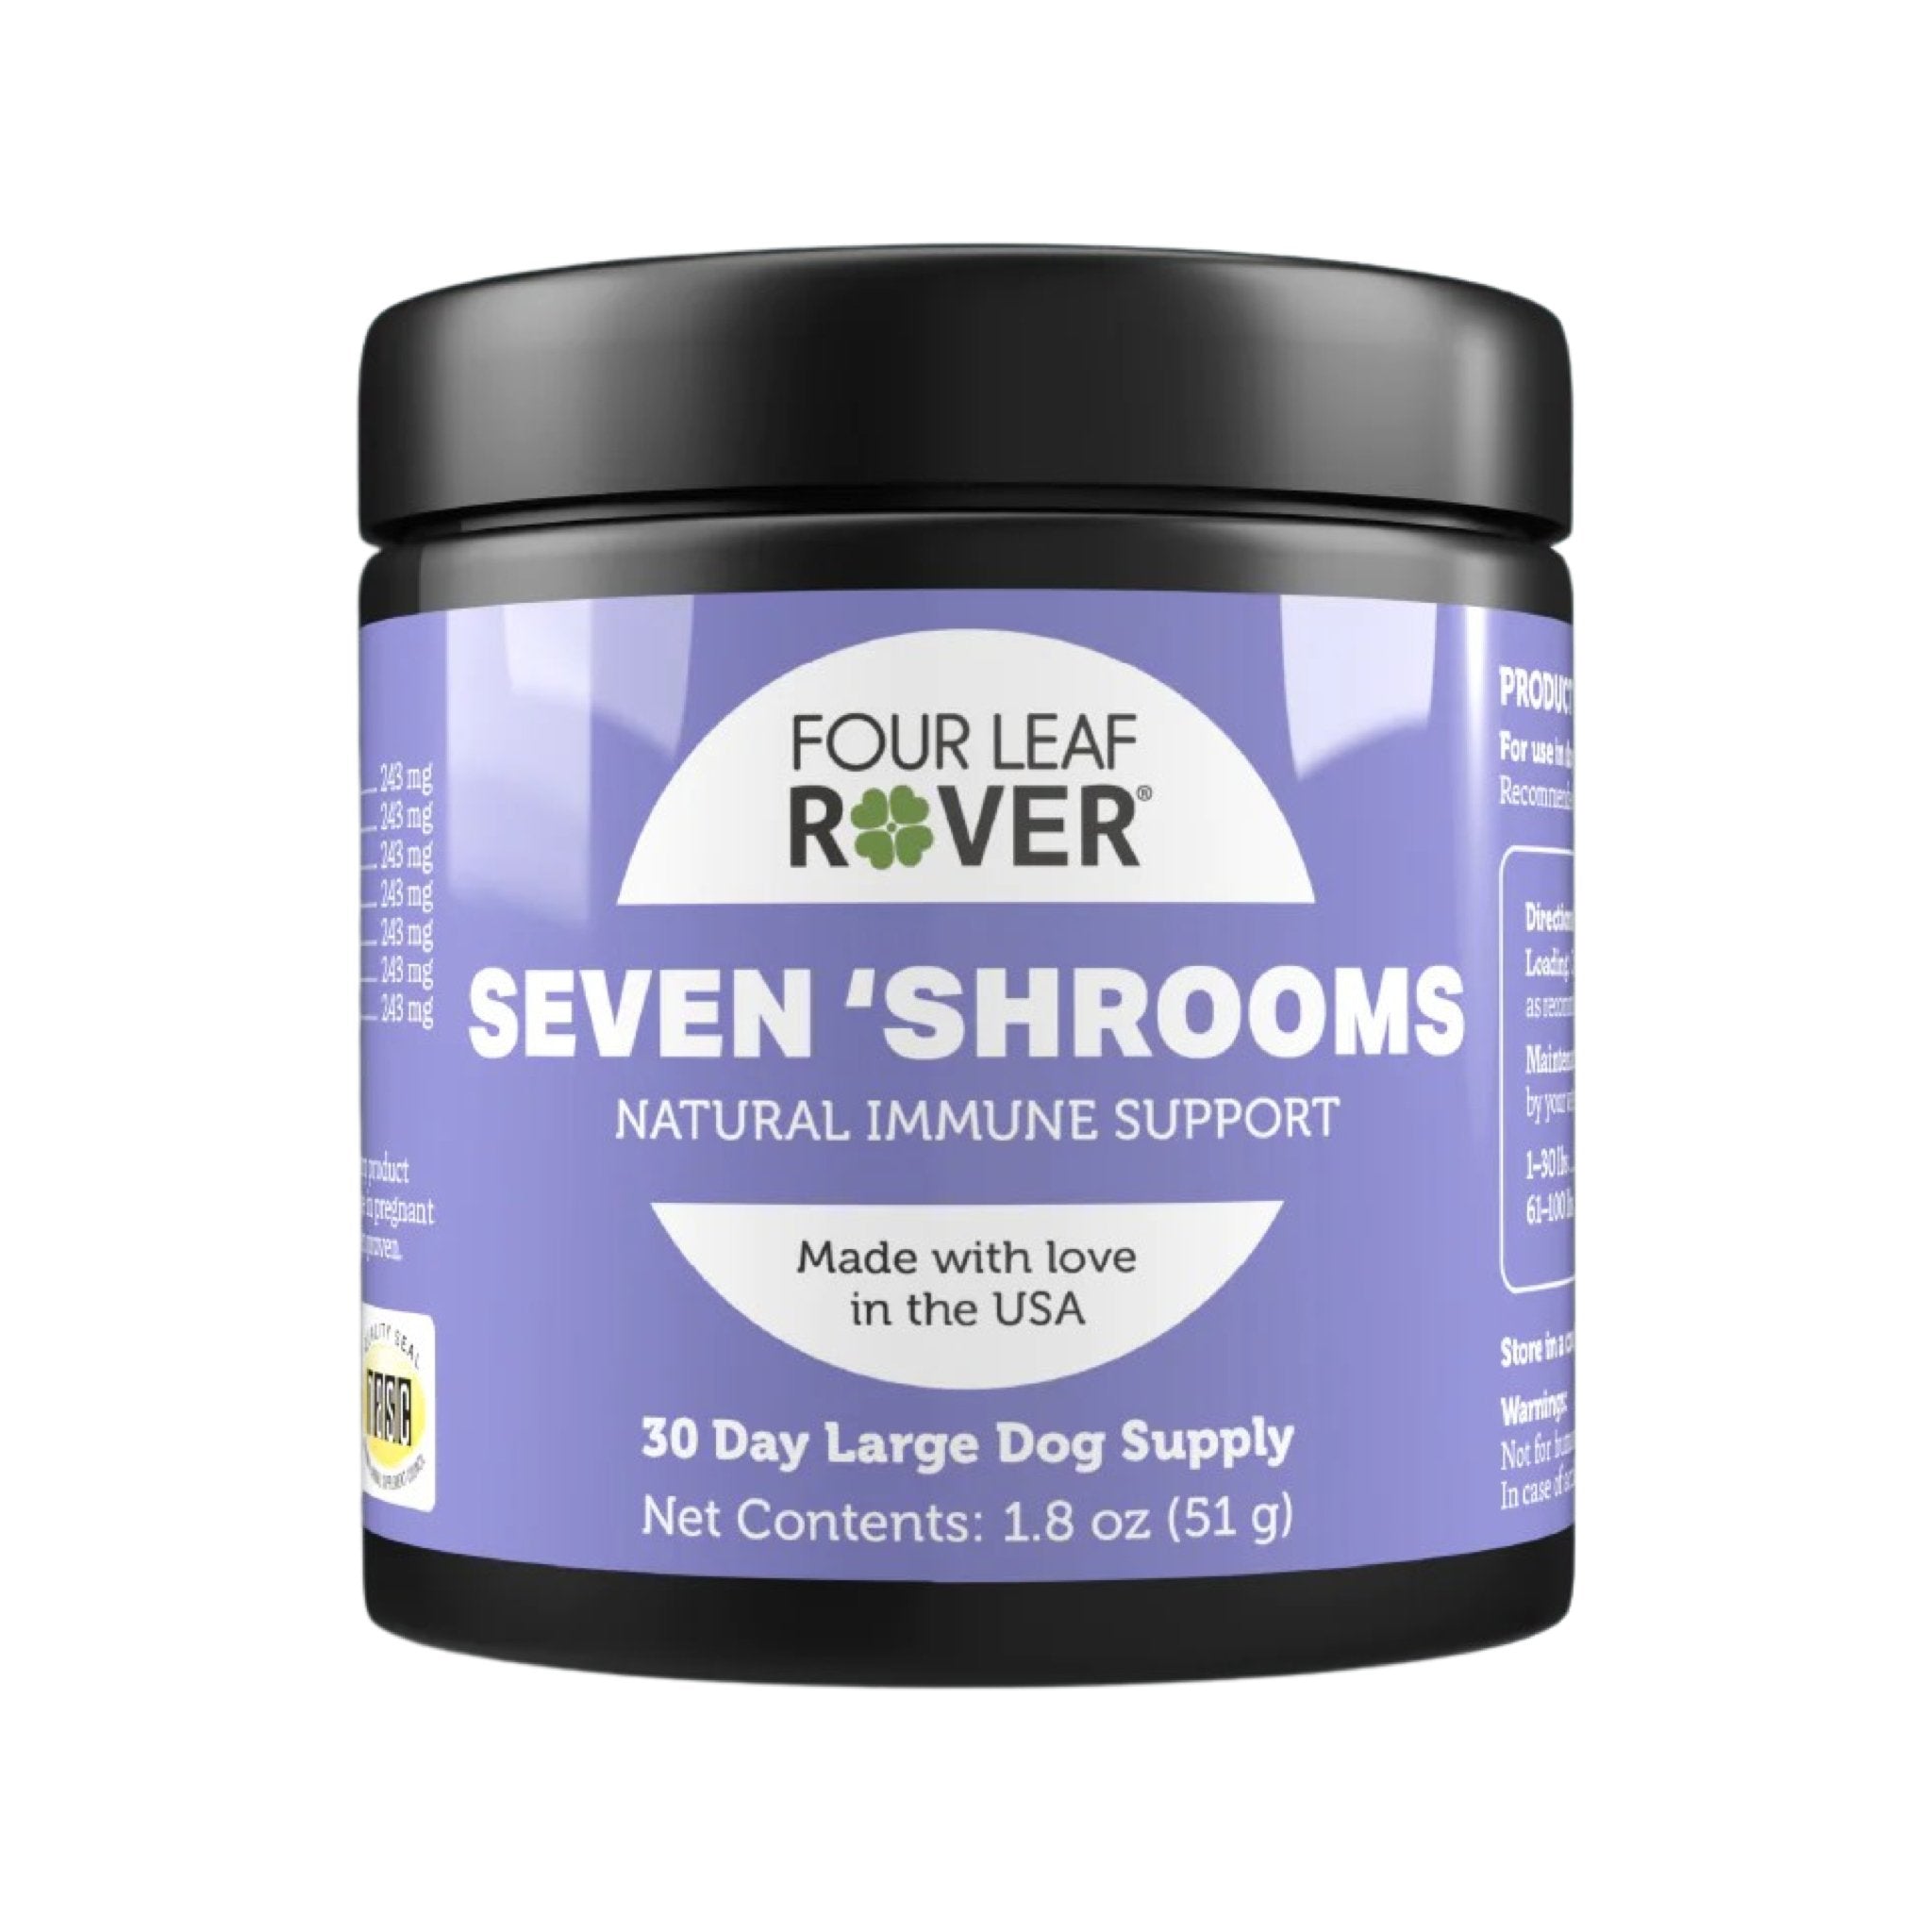 Seven ‘Shrooms Immune Support - Woof Living